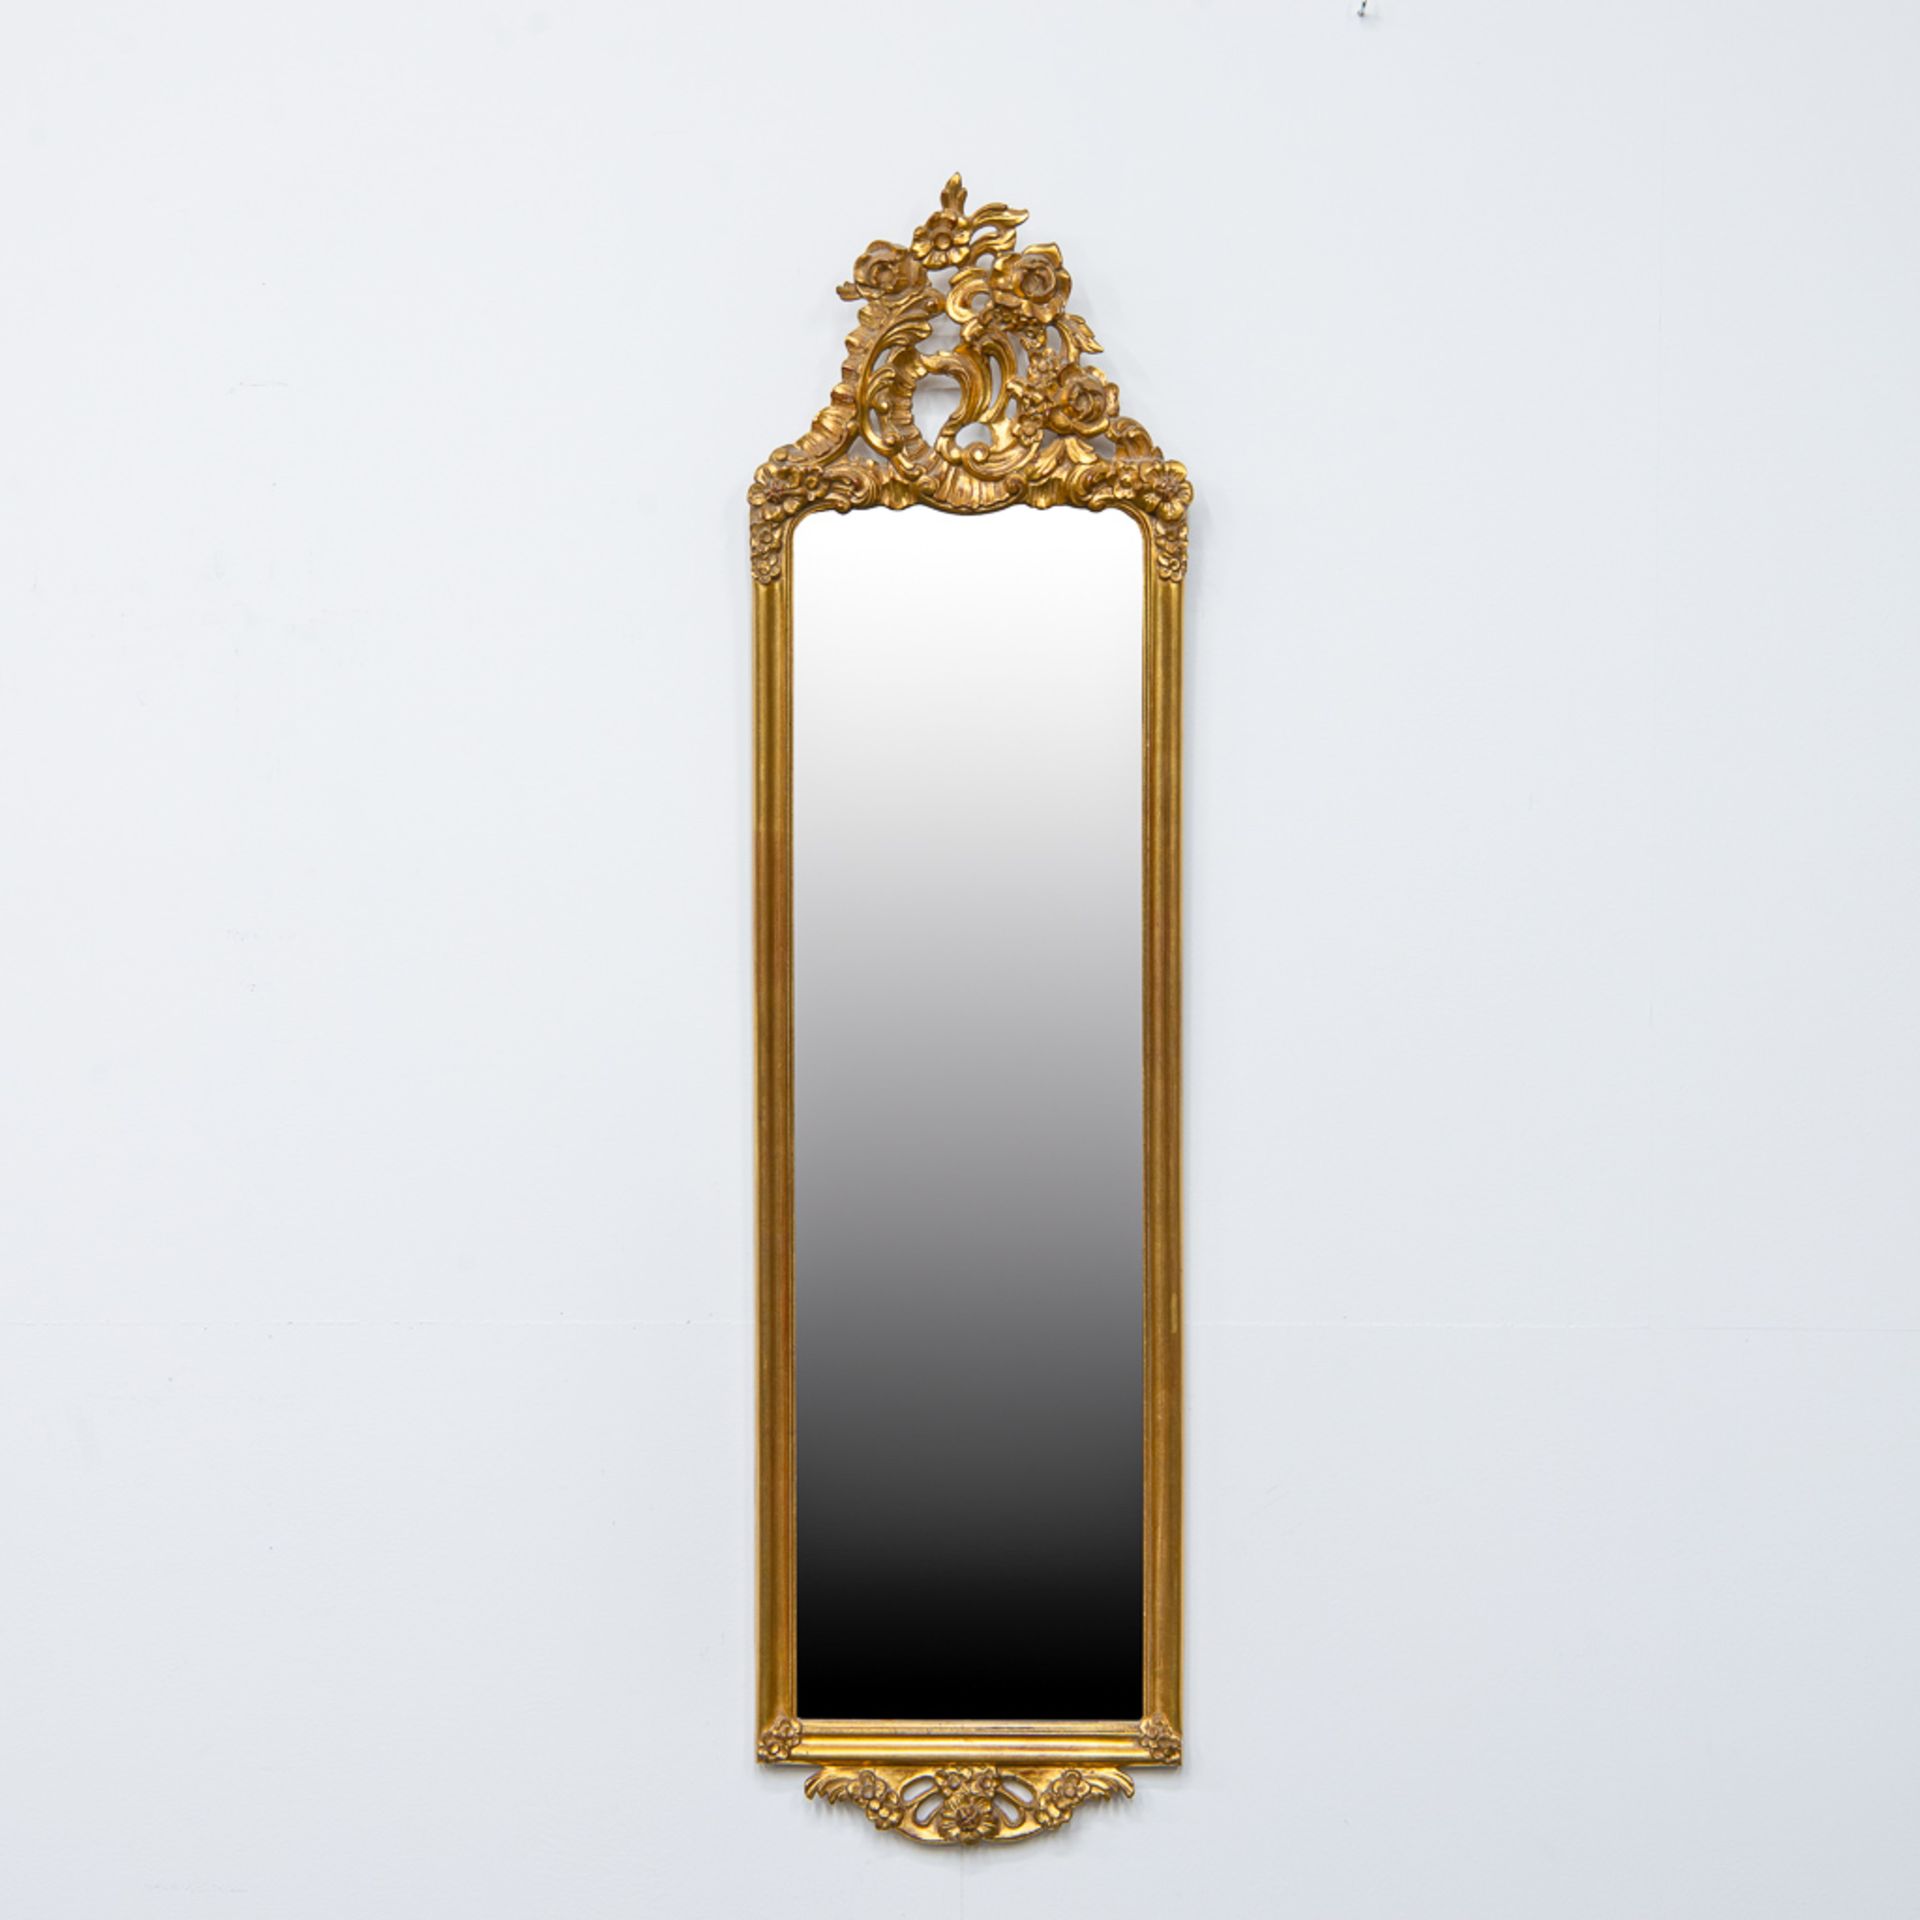 Gilt mirror - Image 6 of 6